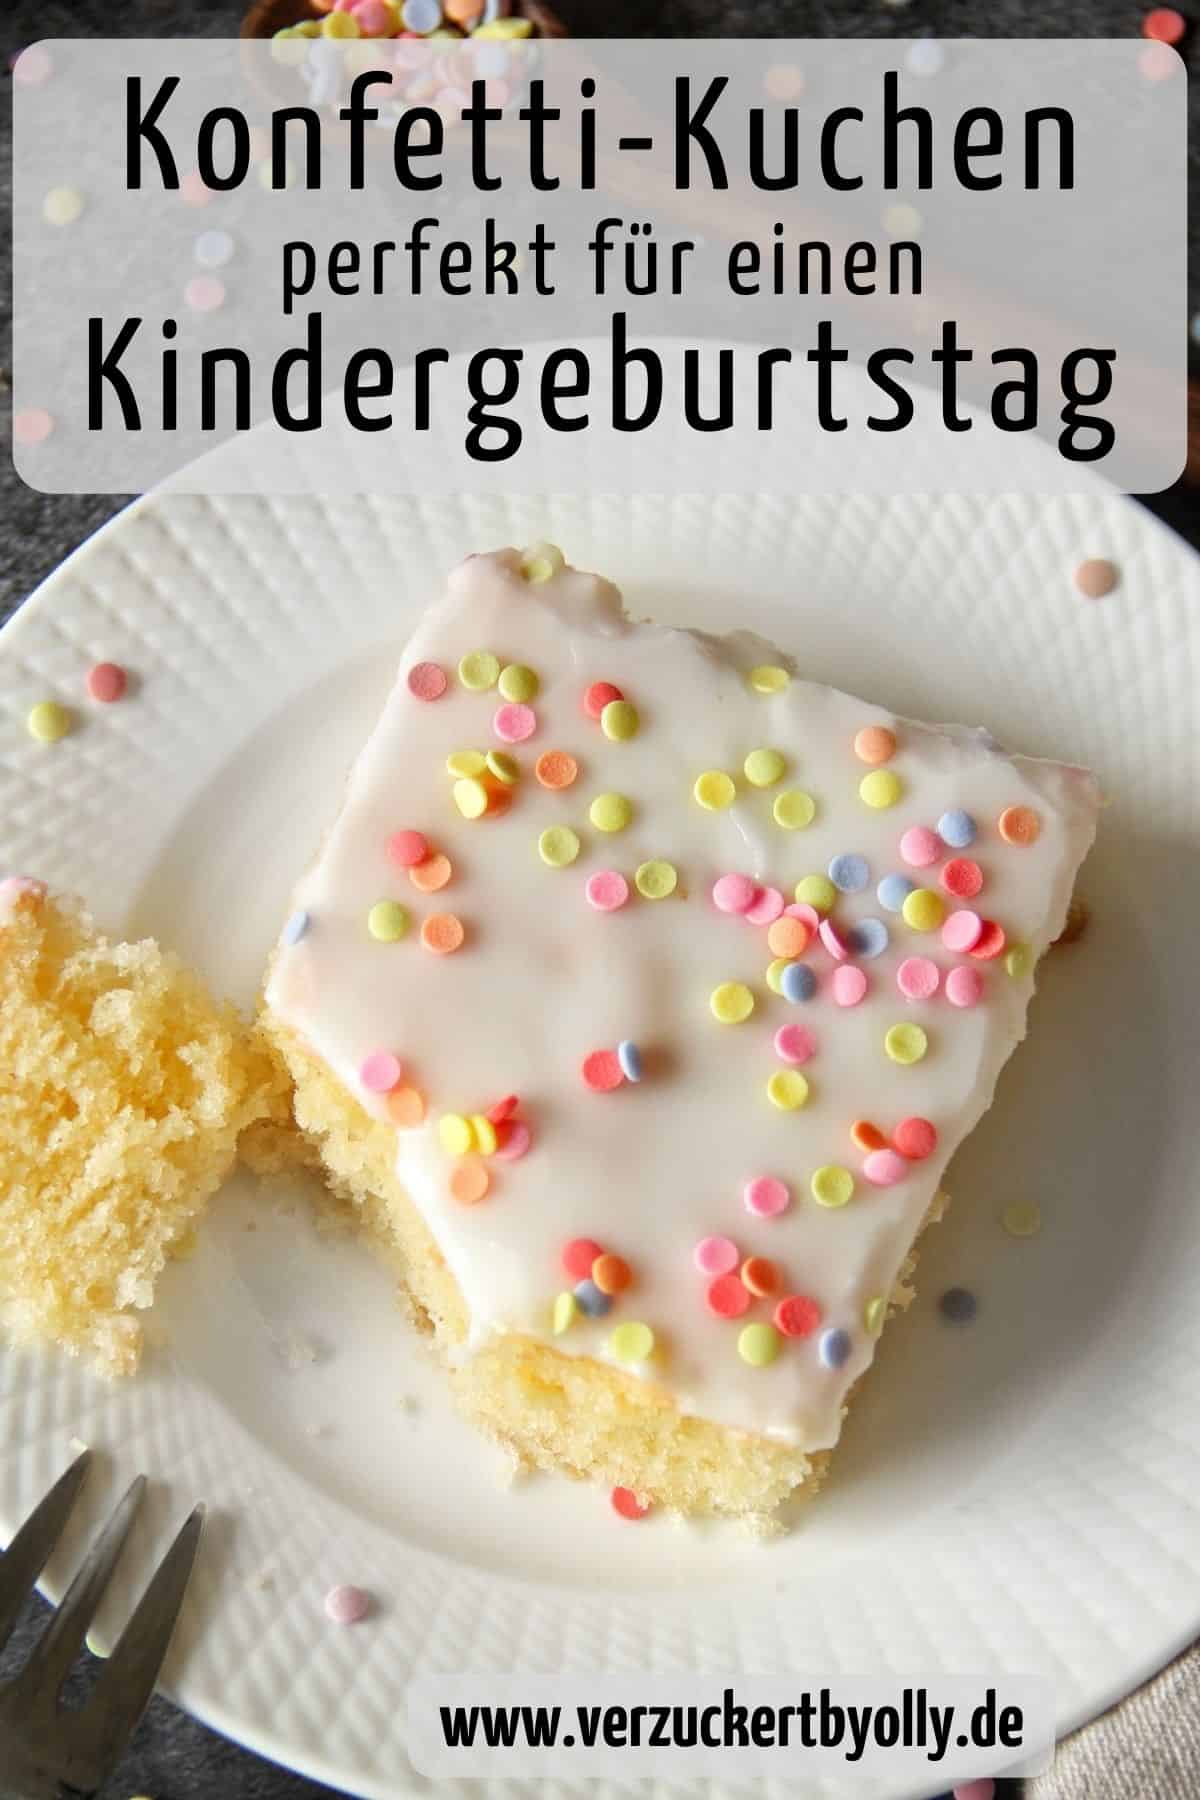 Pin zu Pinterest: Konfetti-Blechkuchen